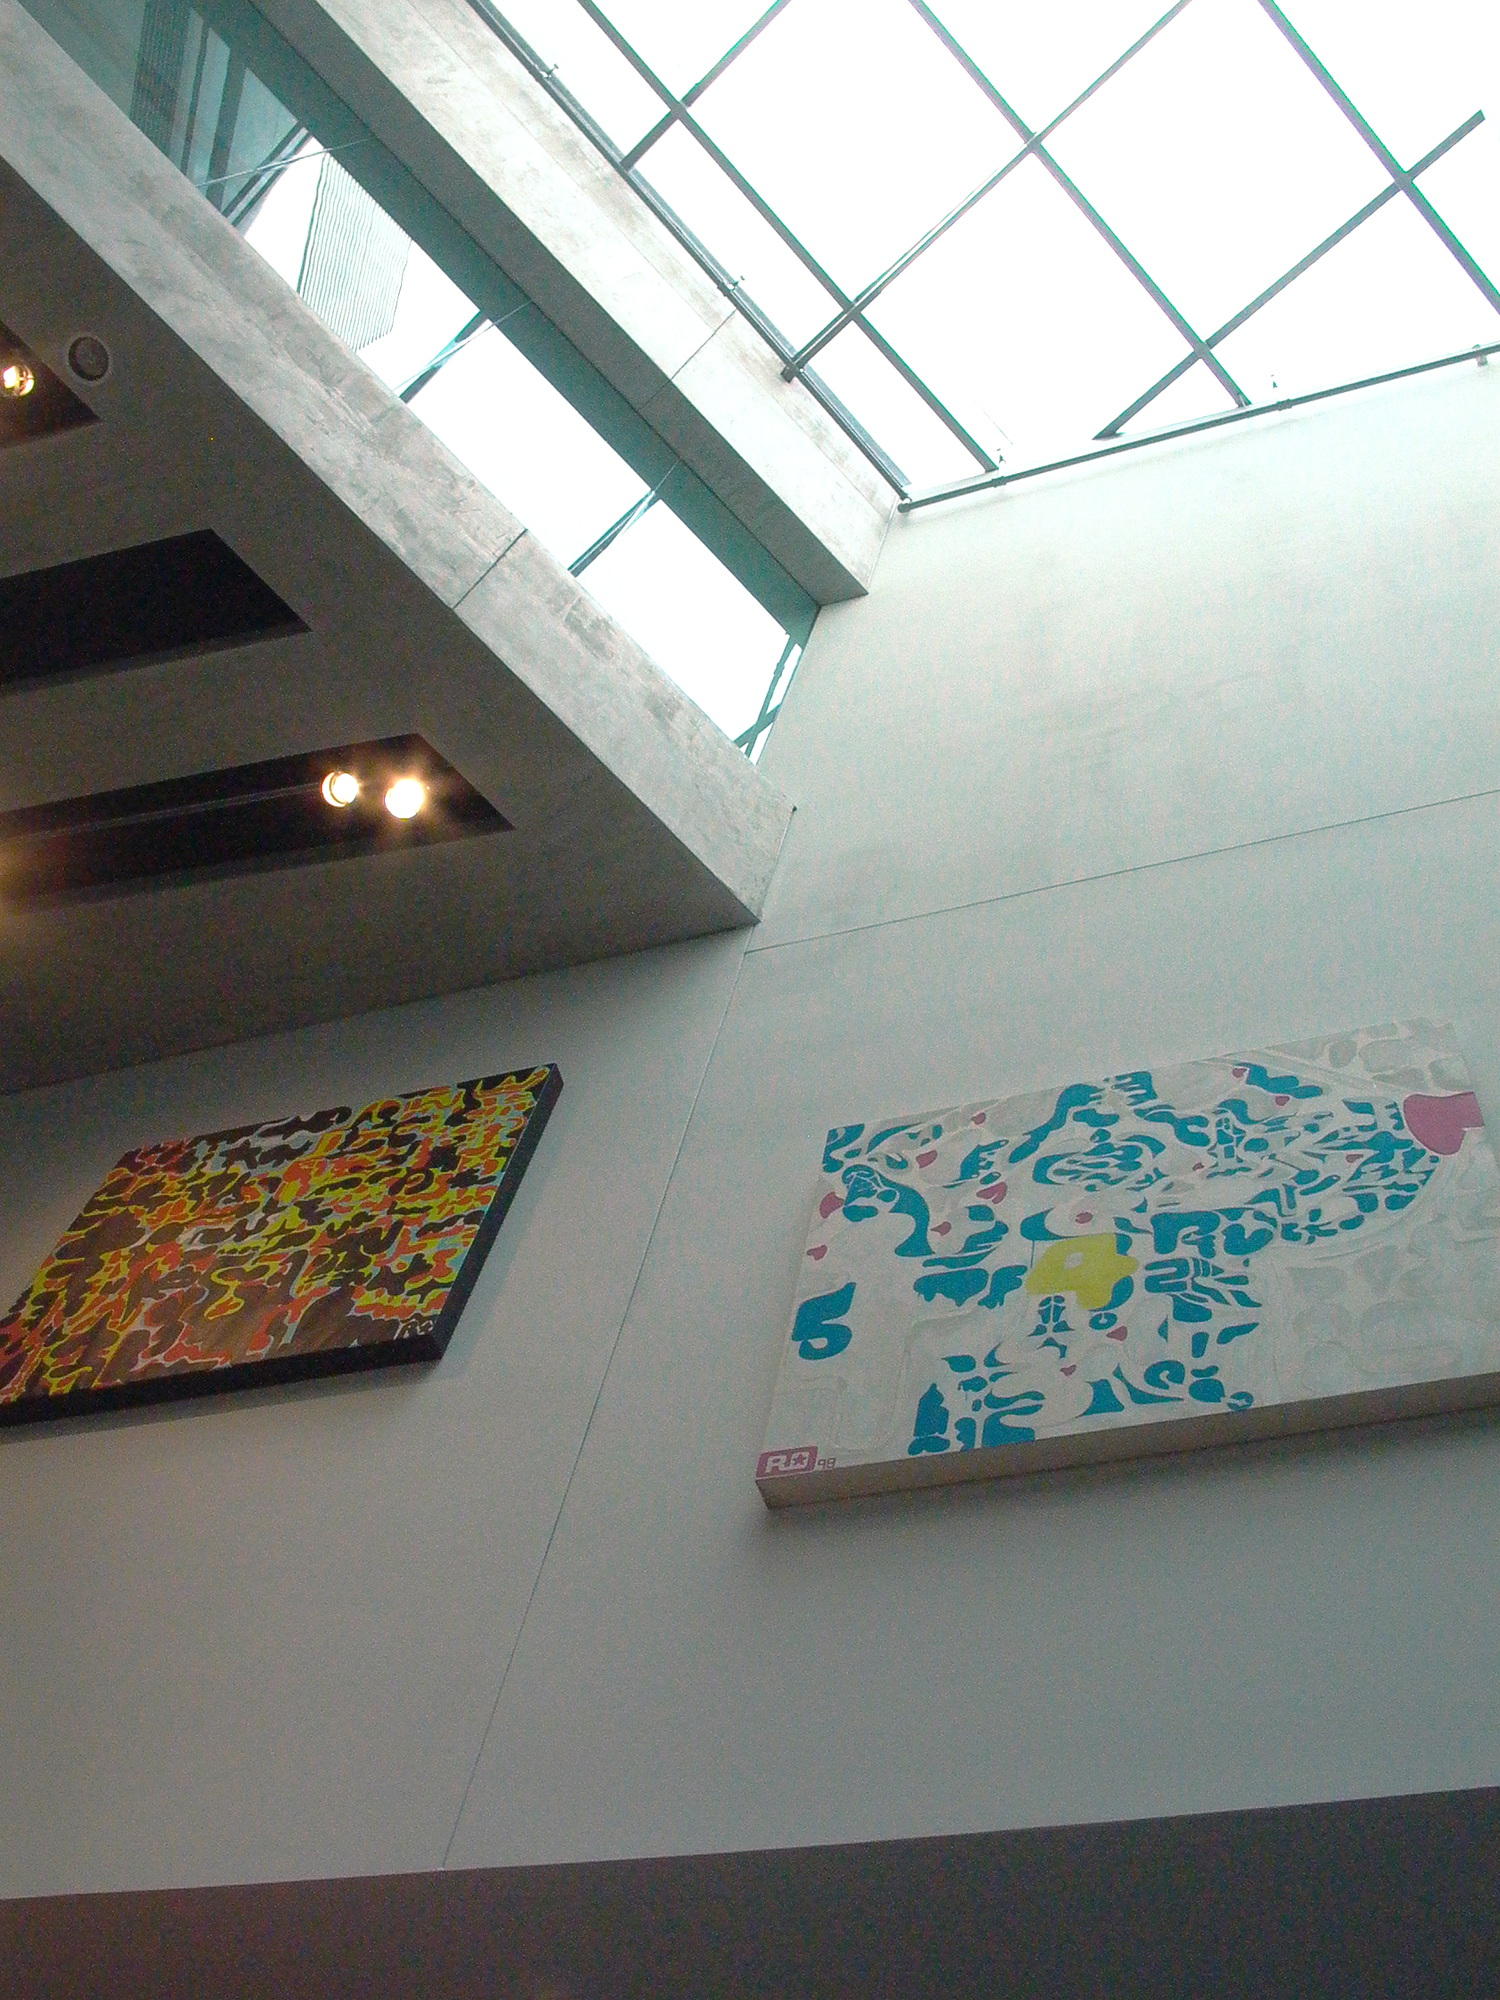  Installation view,&nbsp;   Beautiful Losers    Center for Contemporary Arts  Cincinnati, Ohio, 2004 